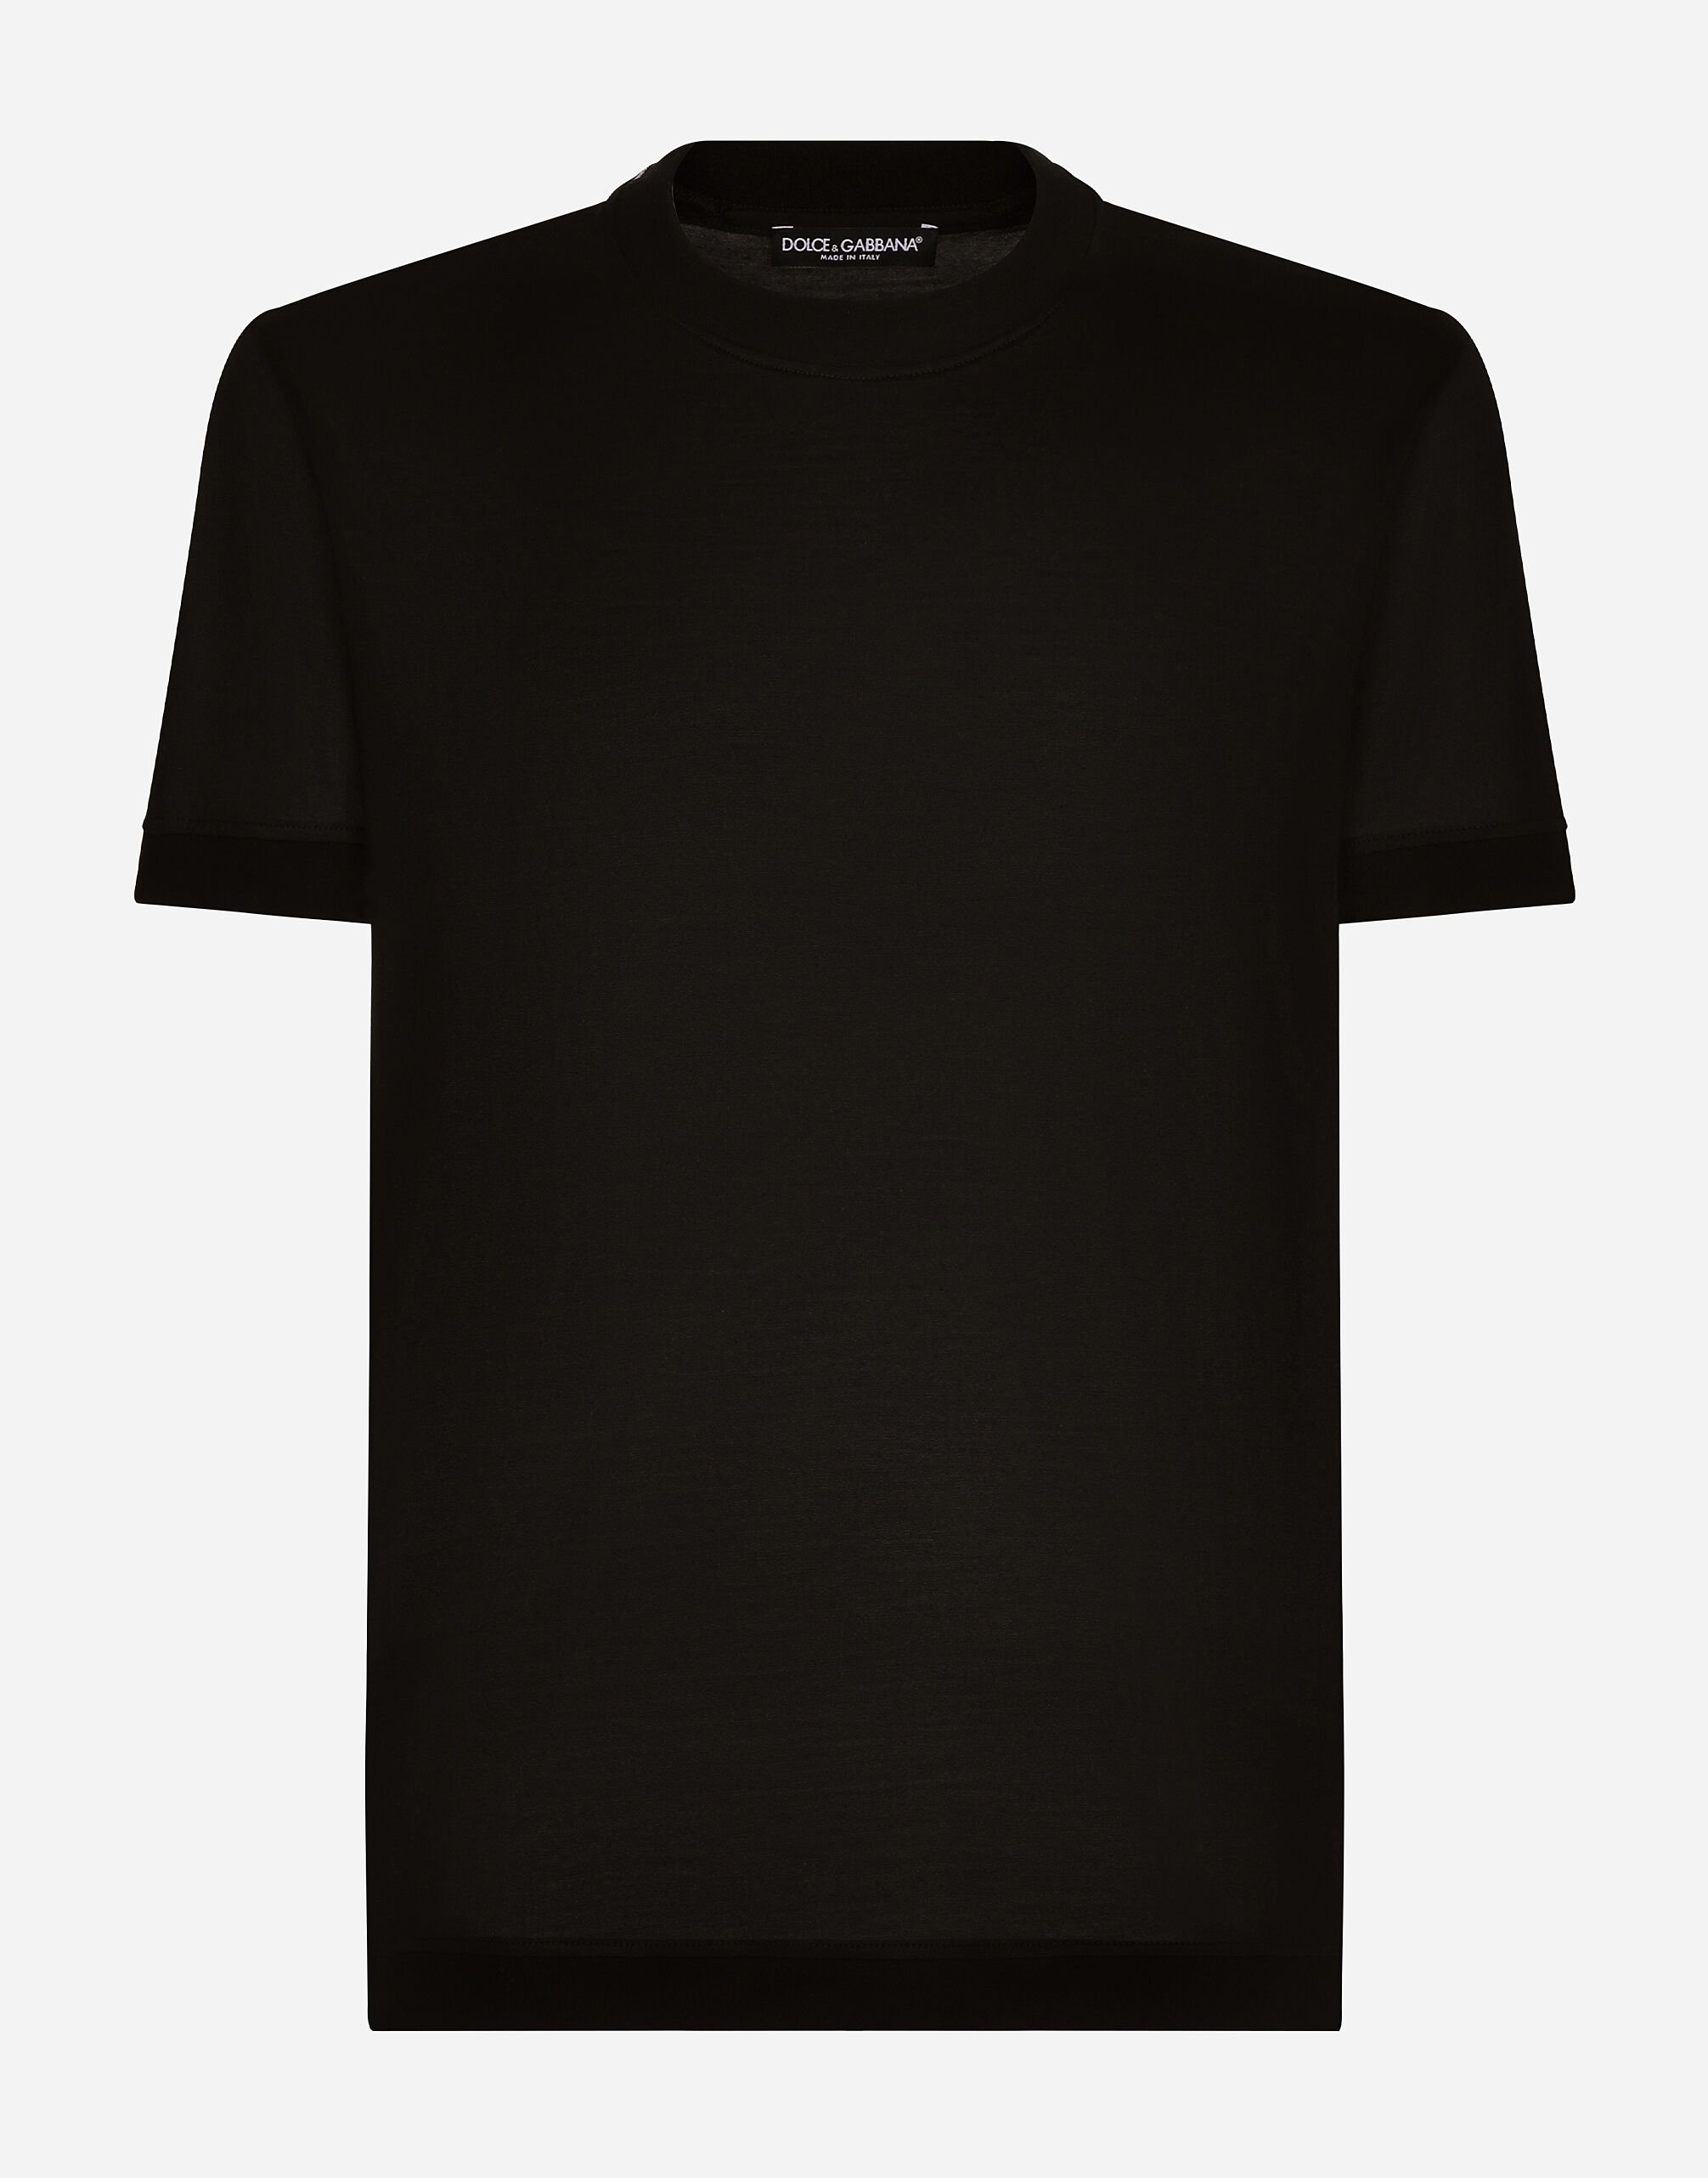 Dolce & Gabbana T-shirt manica corta in seta Stampa G8PB8THI7Z2